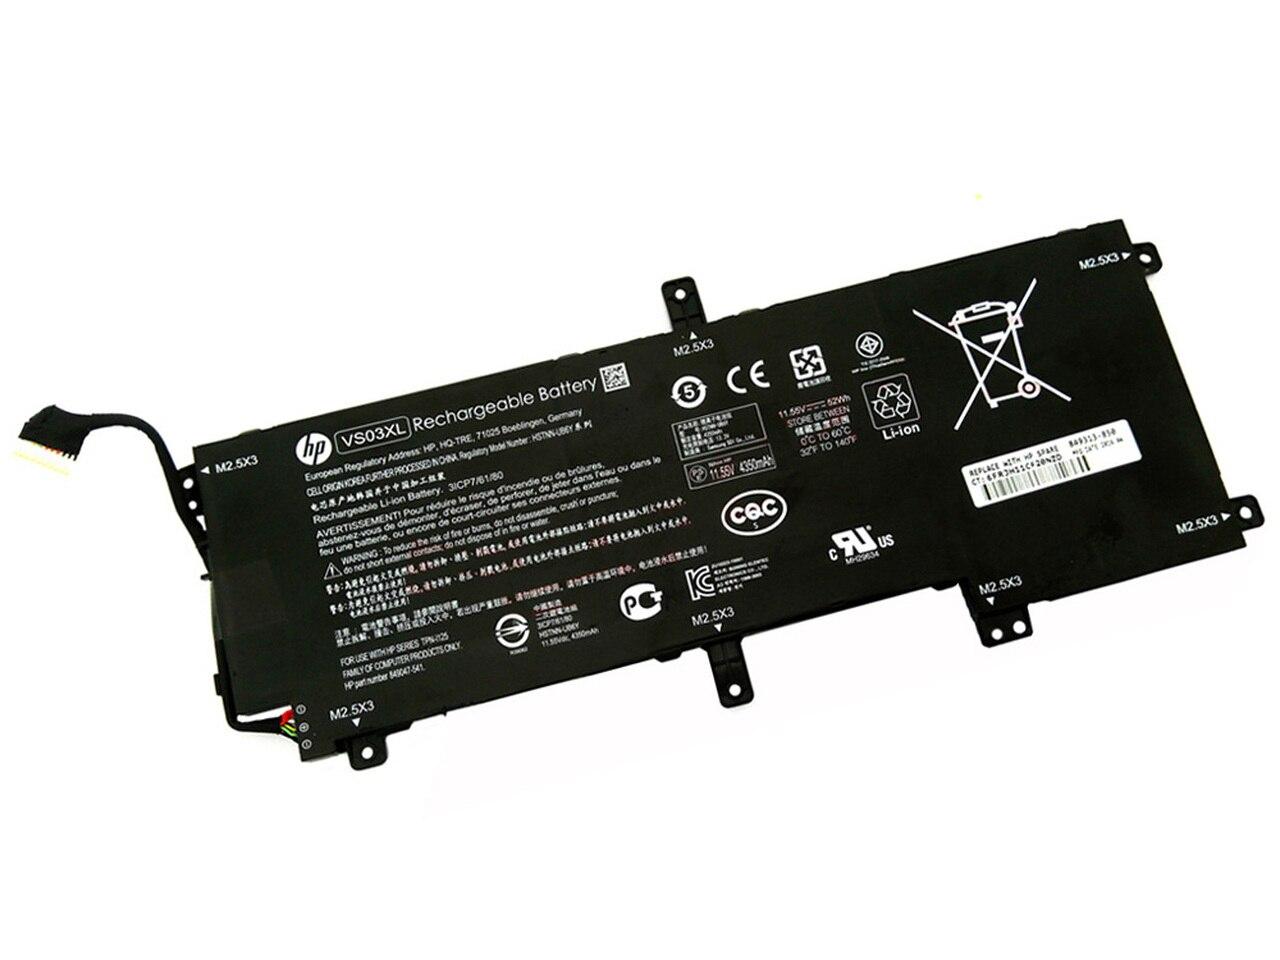 Оригинальный аккумулятор (батарея) для ноутбука HP Envy 15-AS100 (VS03XL) 11.55V 4350mAh